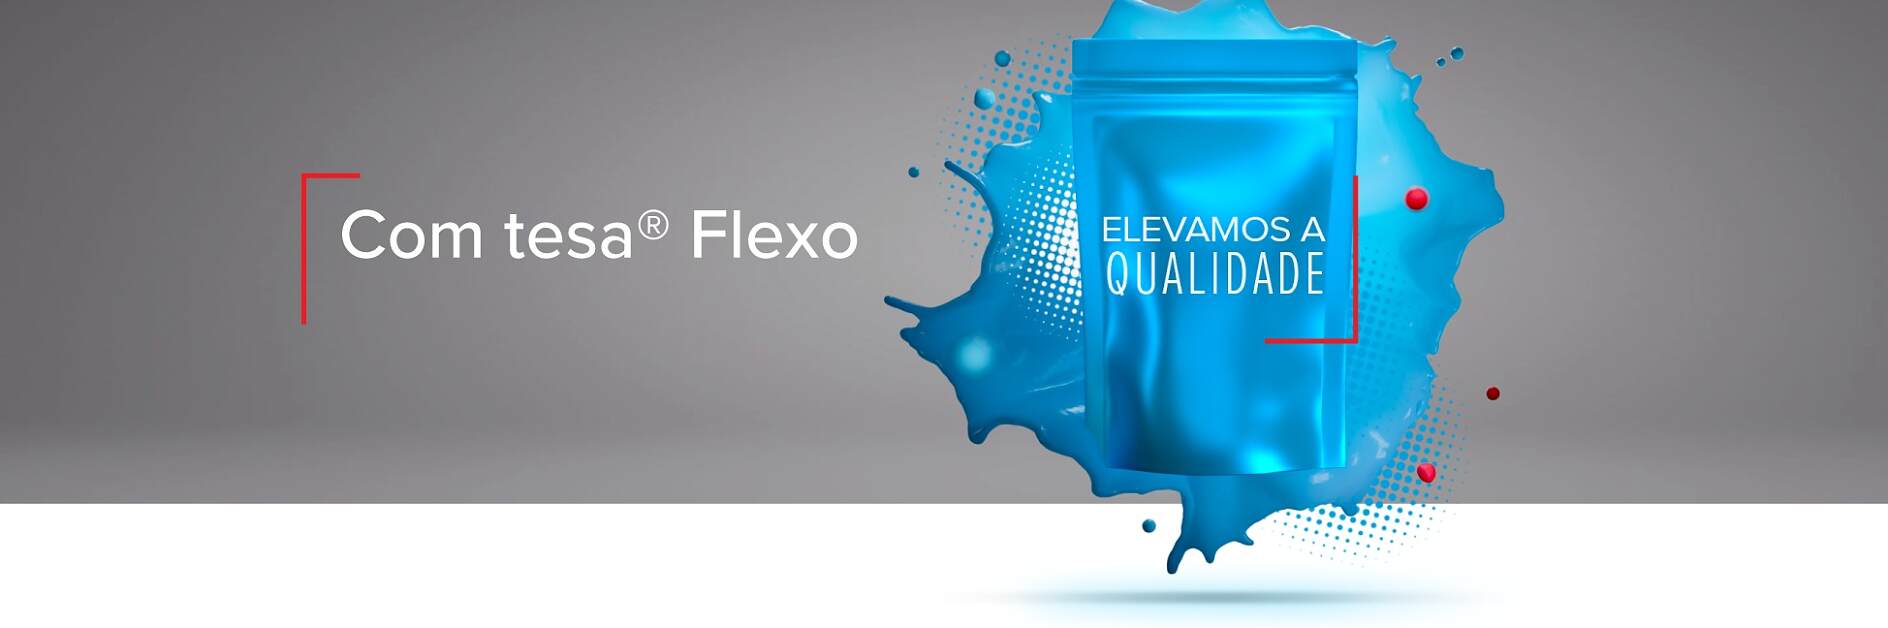 Web-banners4 - flexo